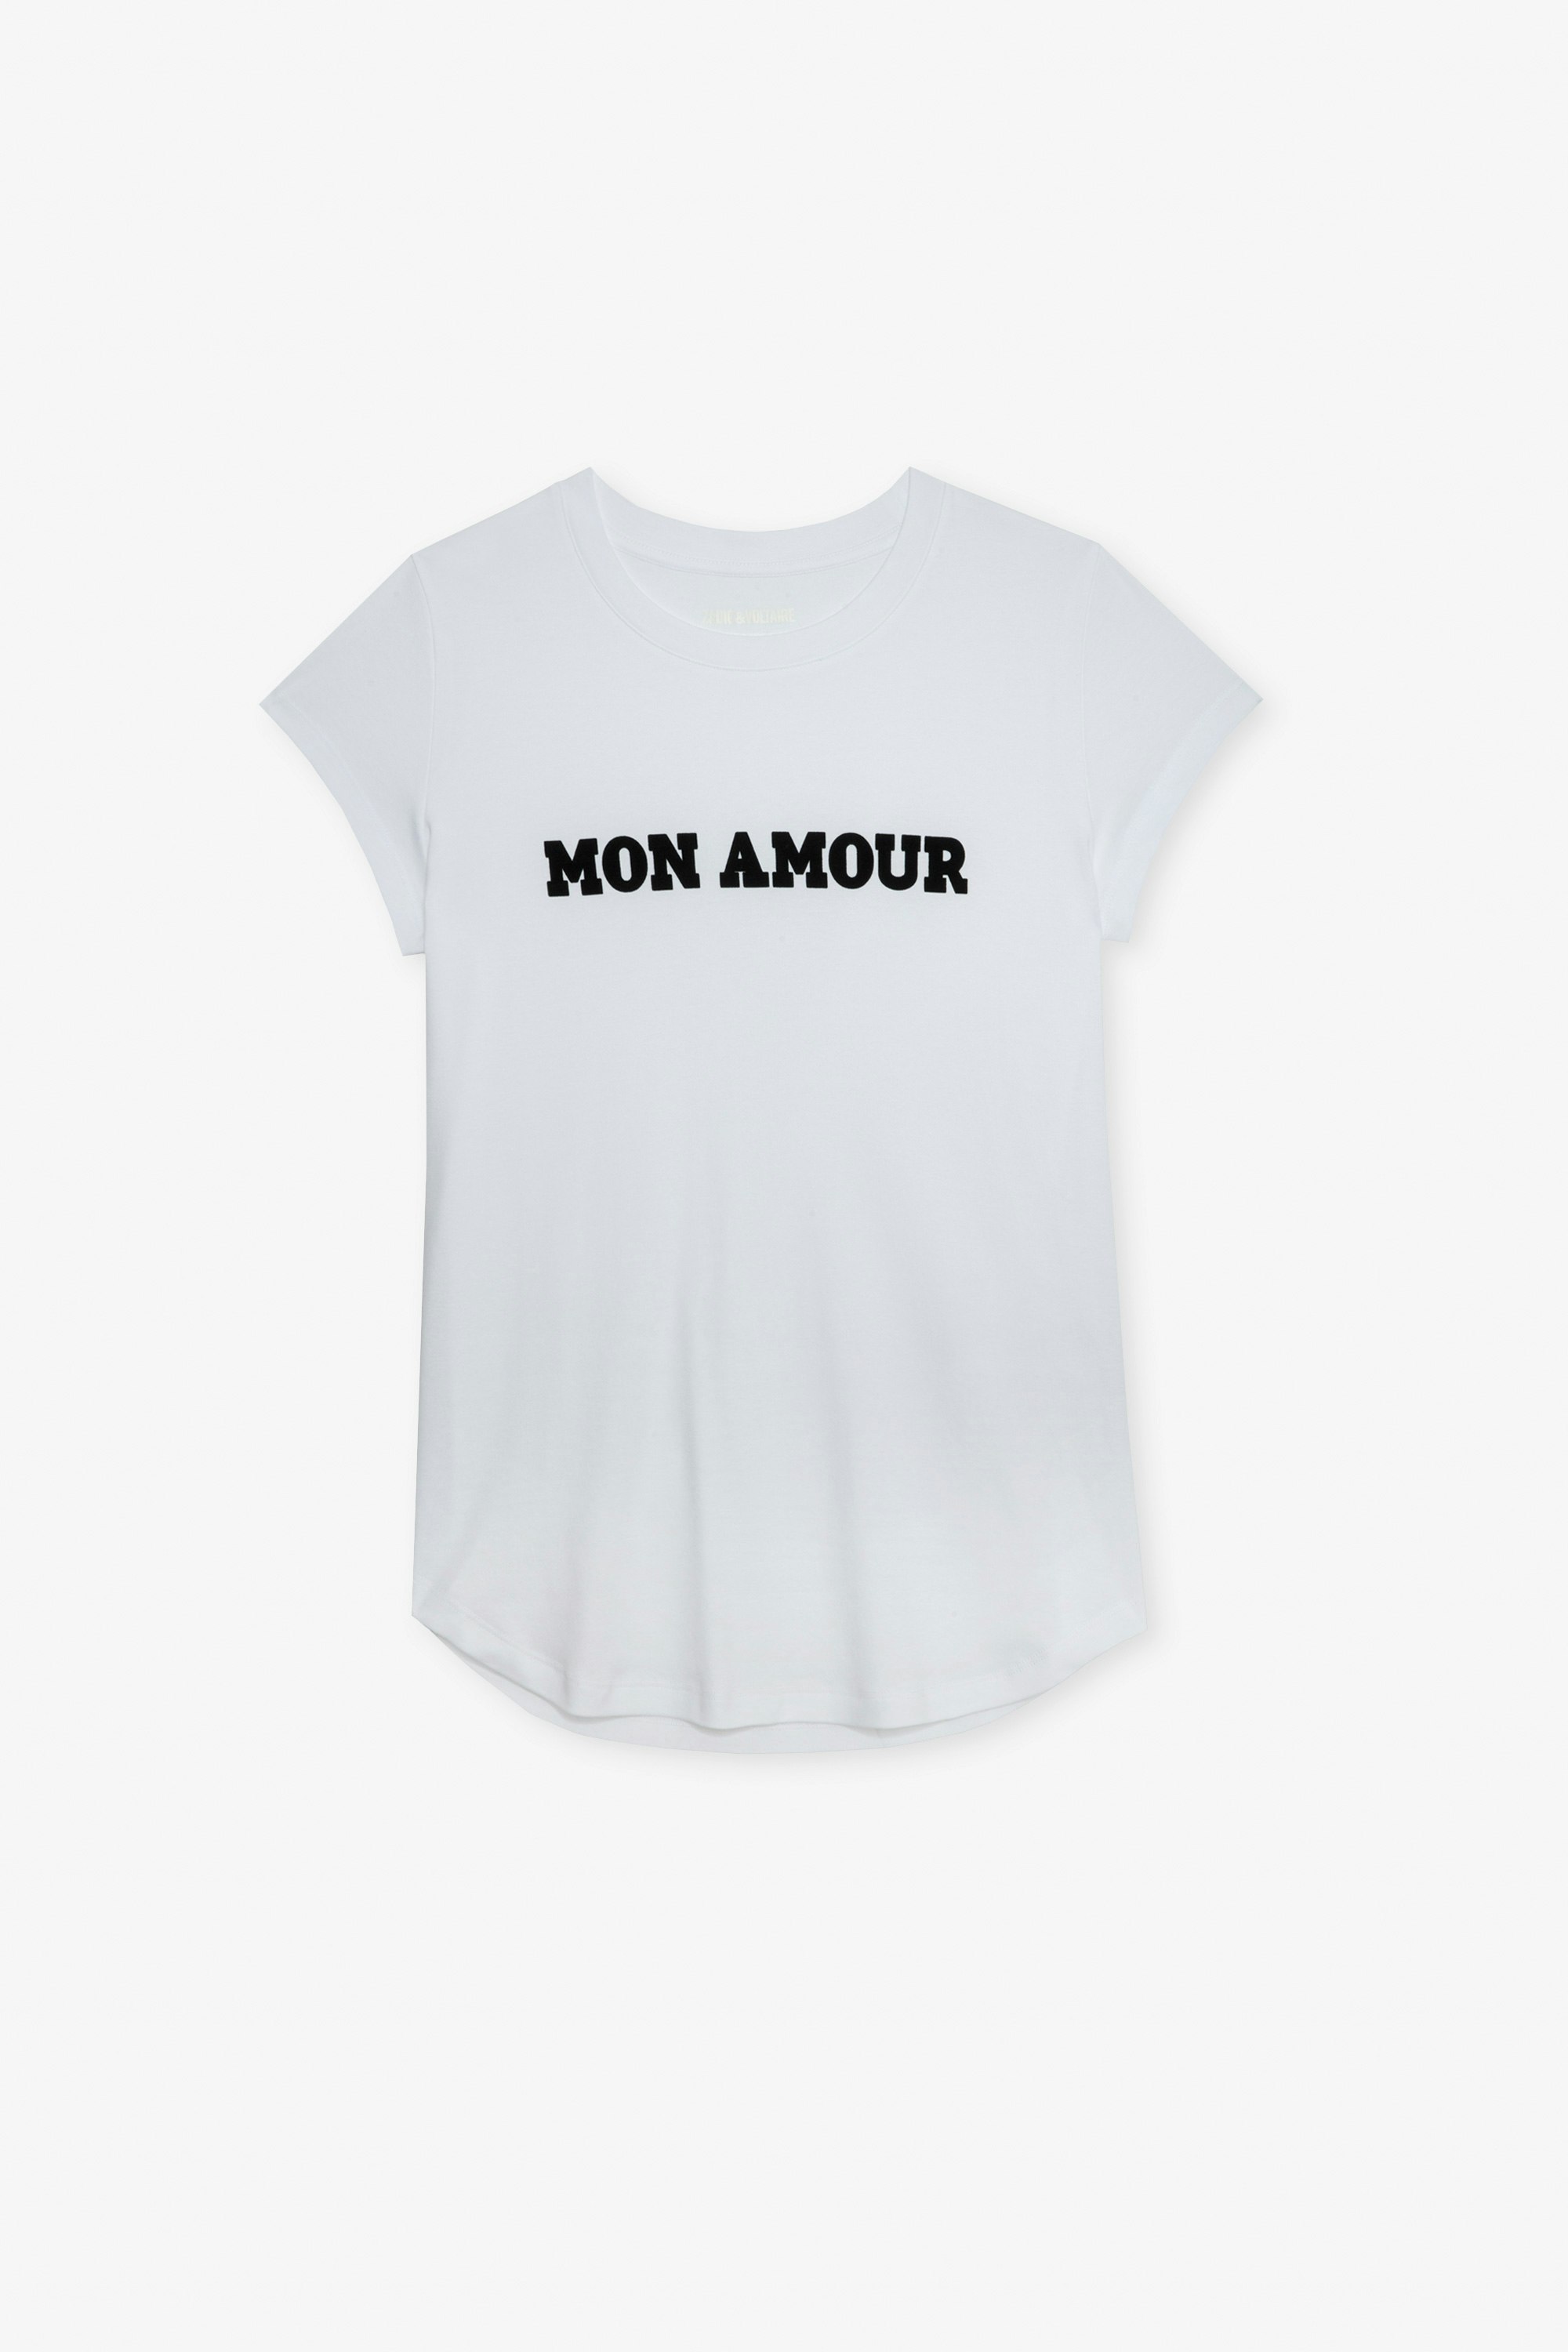 Woop Mon Amour T-shirt Women’s white cotton T-shirt with “Mon amour” slogan.